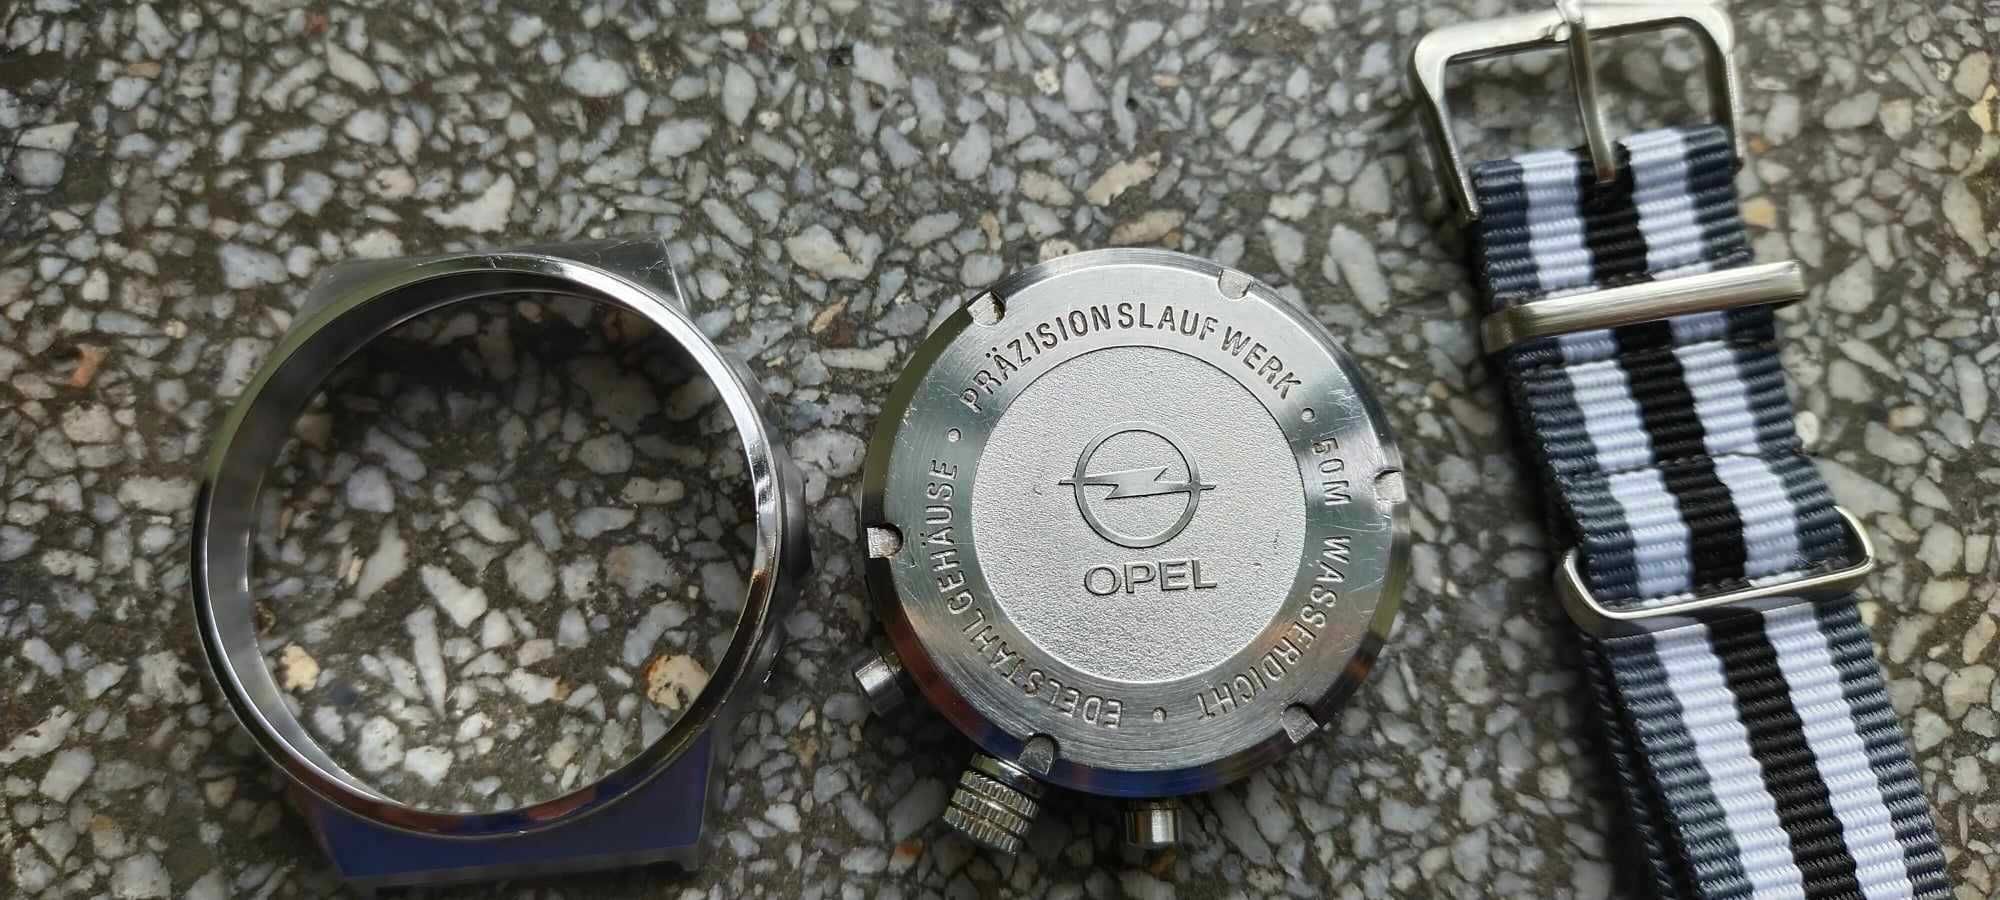 Zegarek Opel Chronograph - mechanizm Seiko nowy pasek